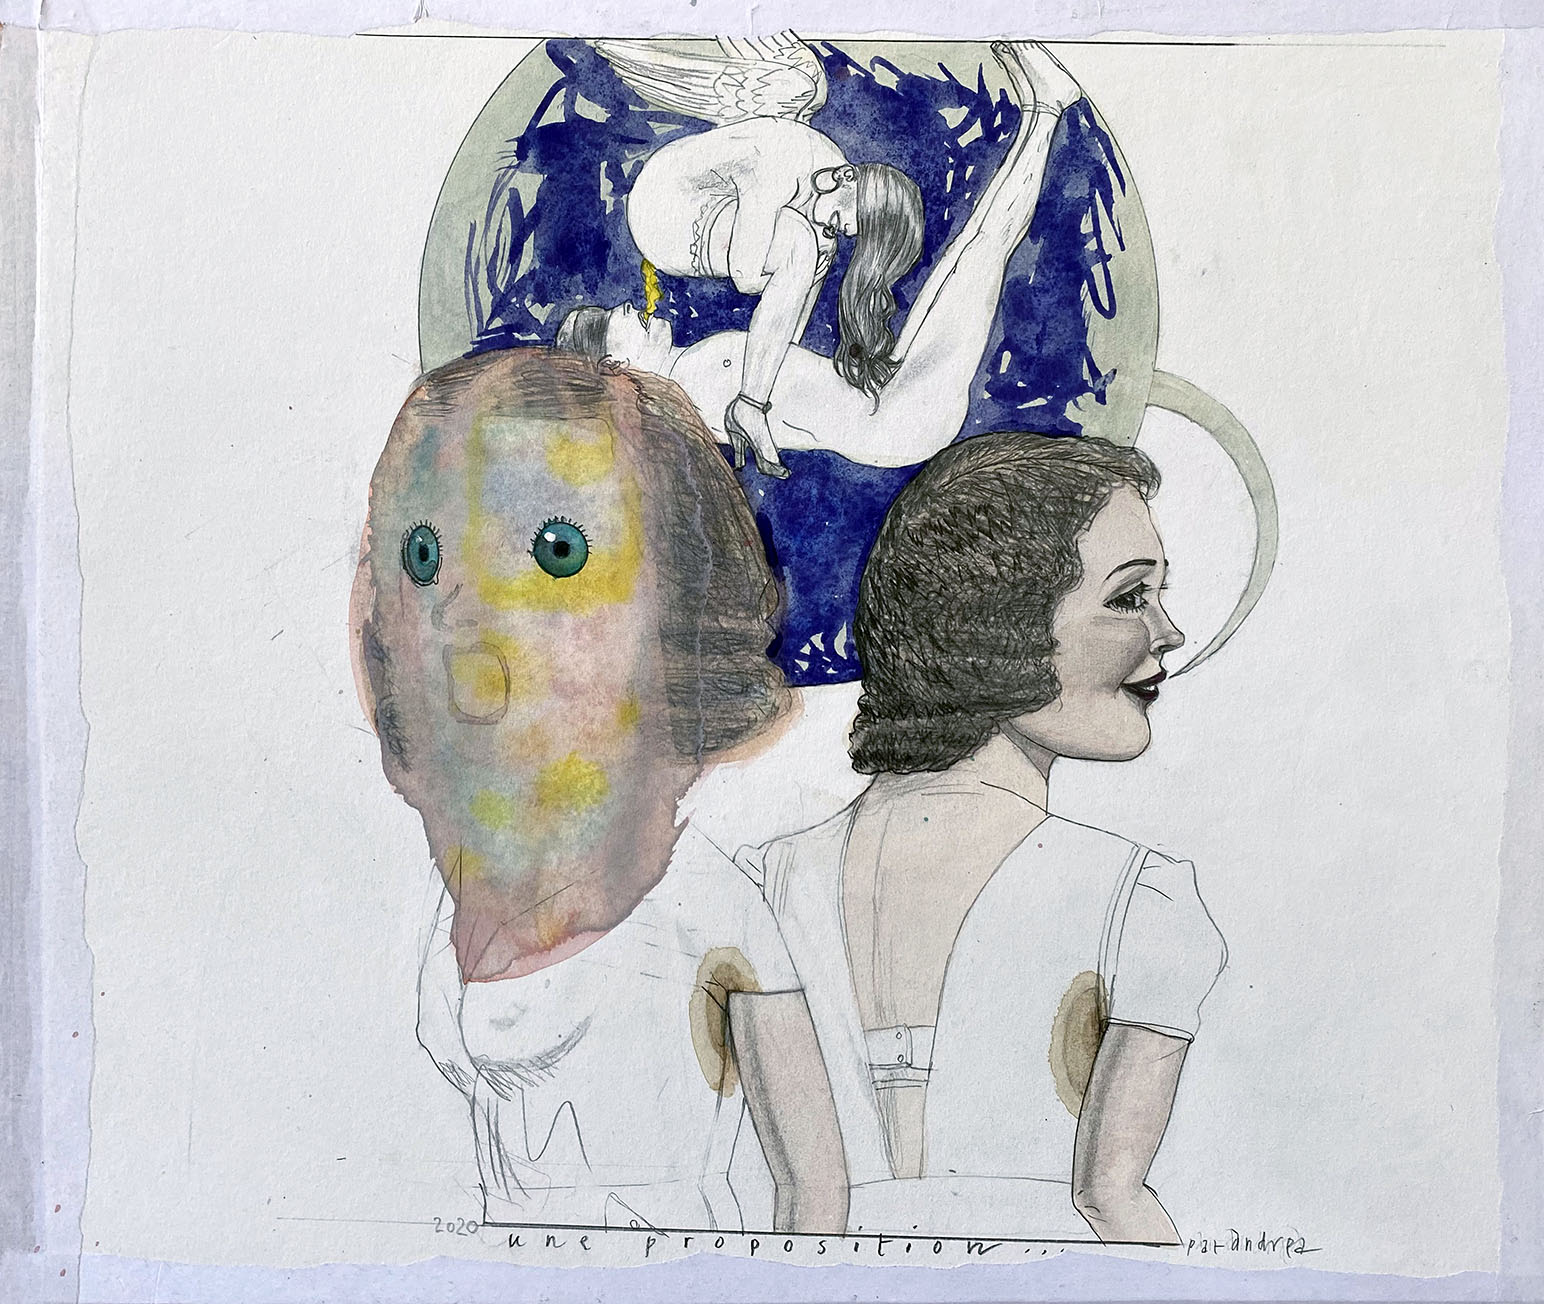 Pat Andrea, Une proposition, mixed media on paper, 40 x 45 cm, 2020